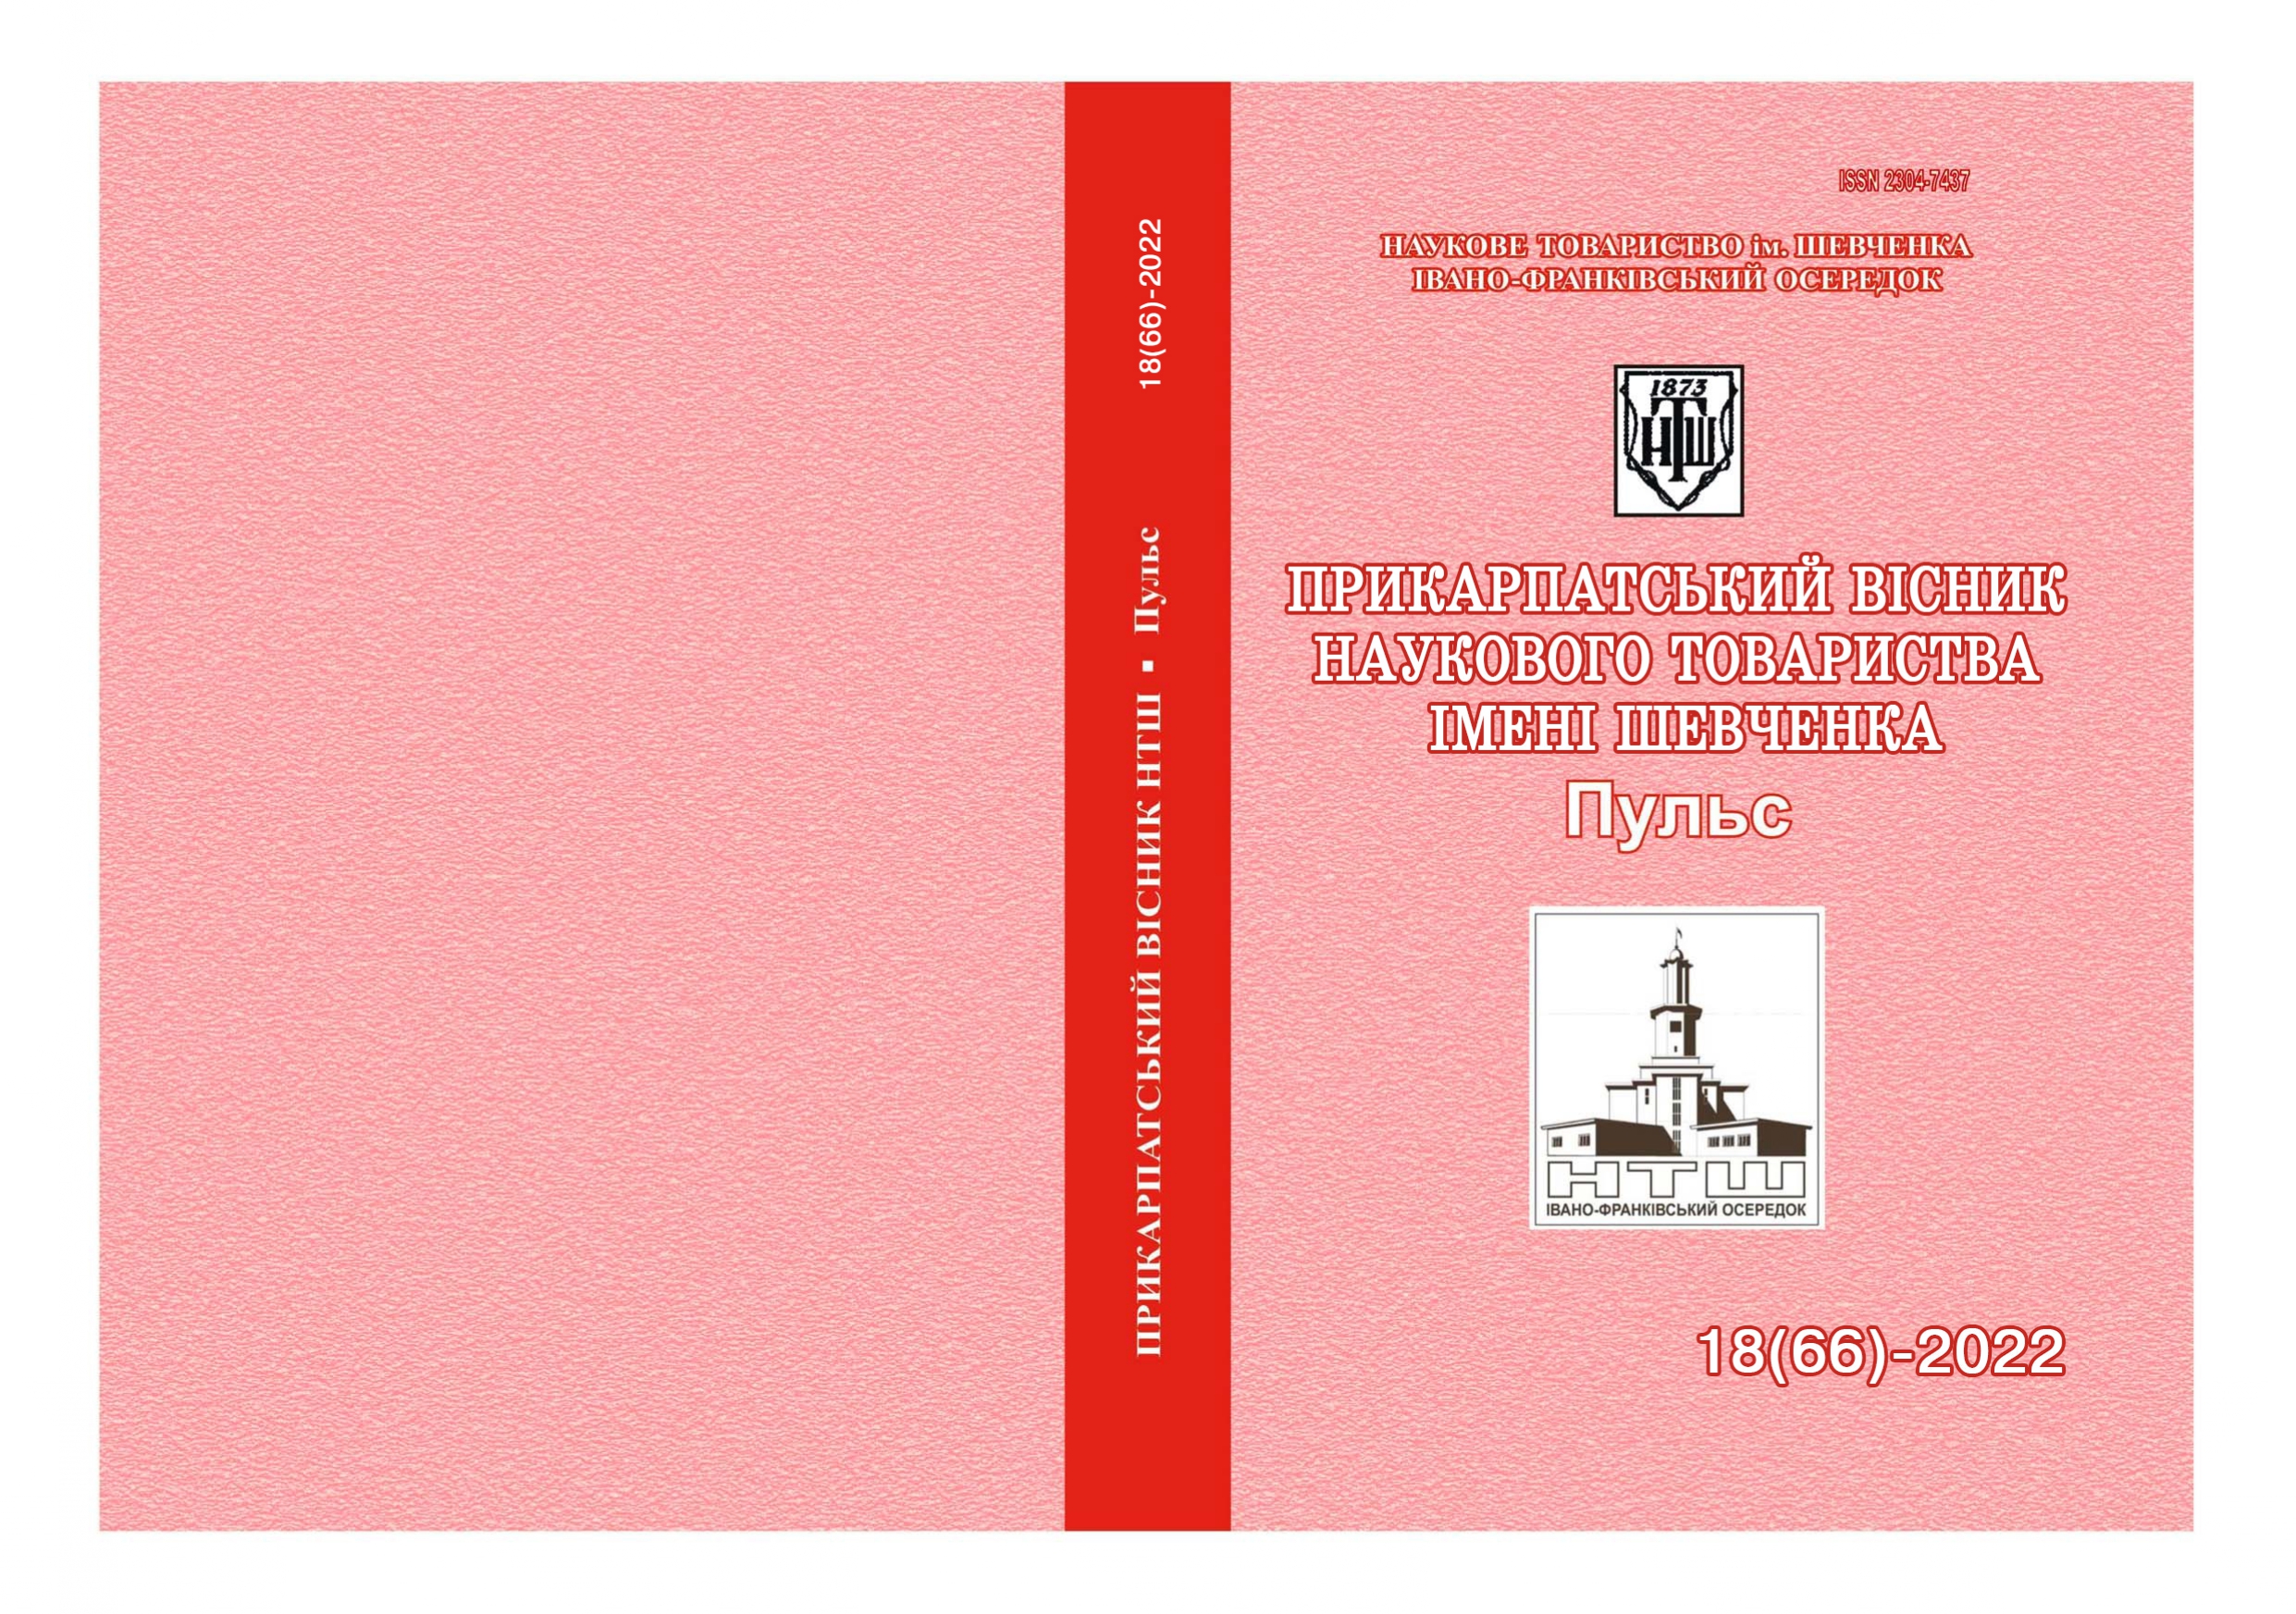 					View No. 18 (66) (2022): PRECARPATHIAN BULLETIN OF THE SHEVCHENKO SCIENTIFIC SOCIETY "Pulse"
				